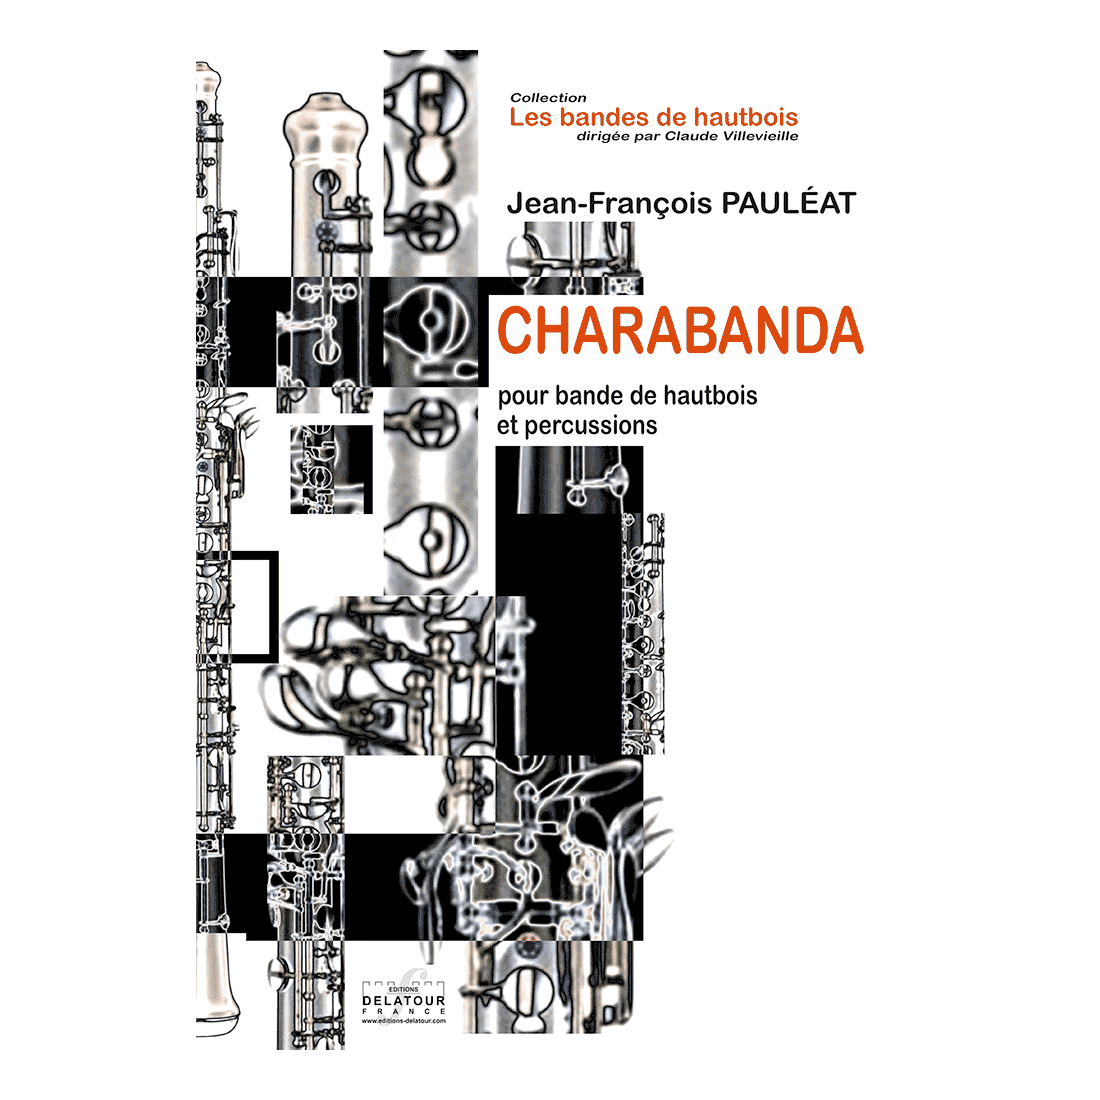 Charabanda for oboe band and percussion